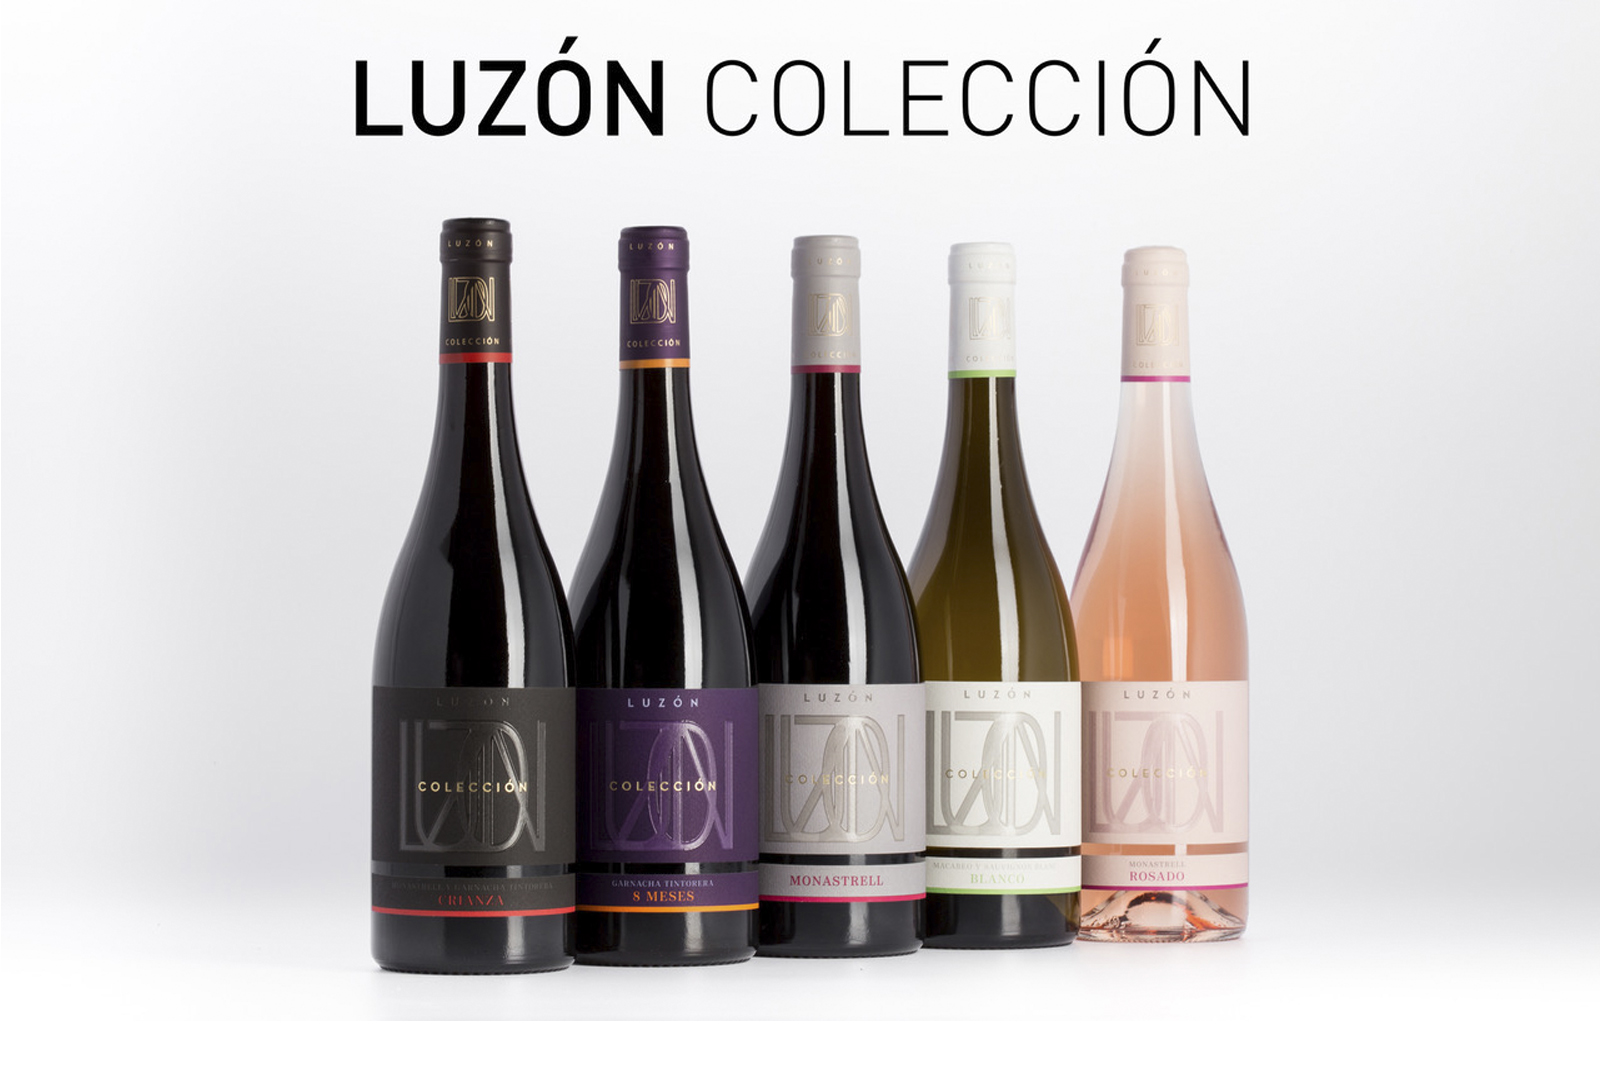 Luzón Colección la nueva gama de Bodegas Luzón - VINOS DIFERENTES